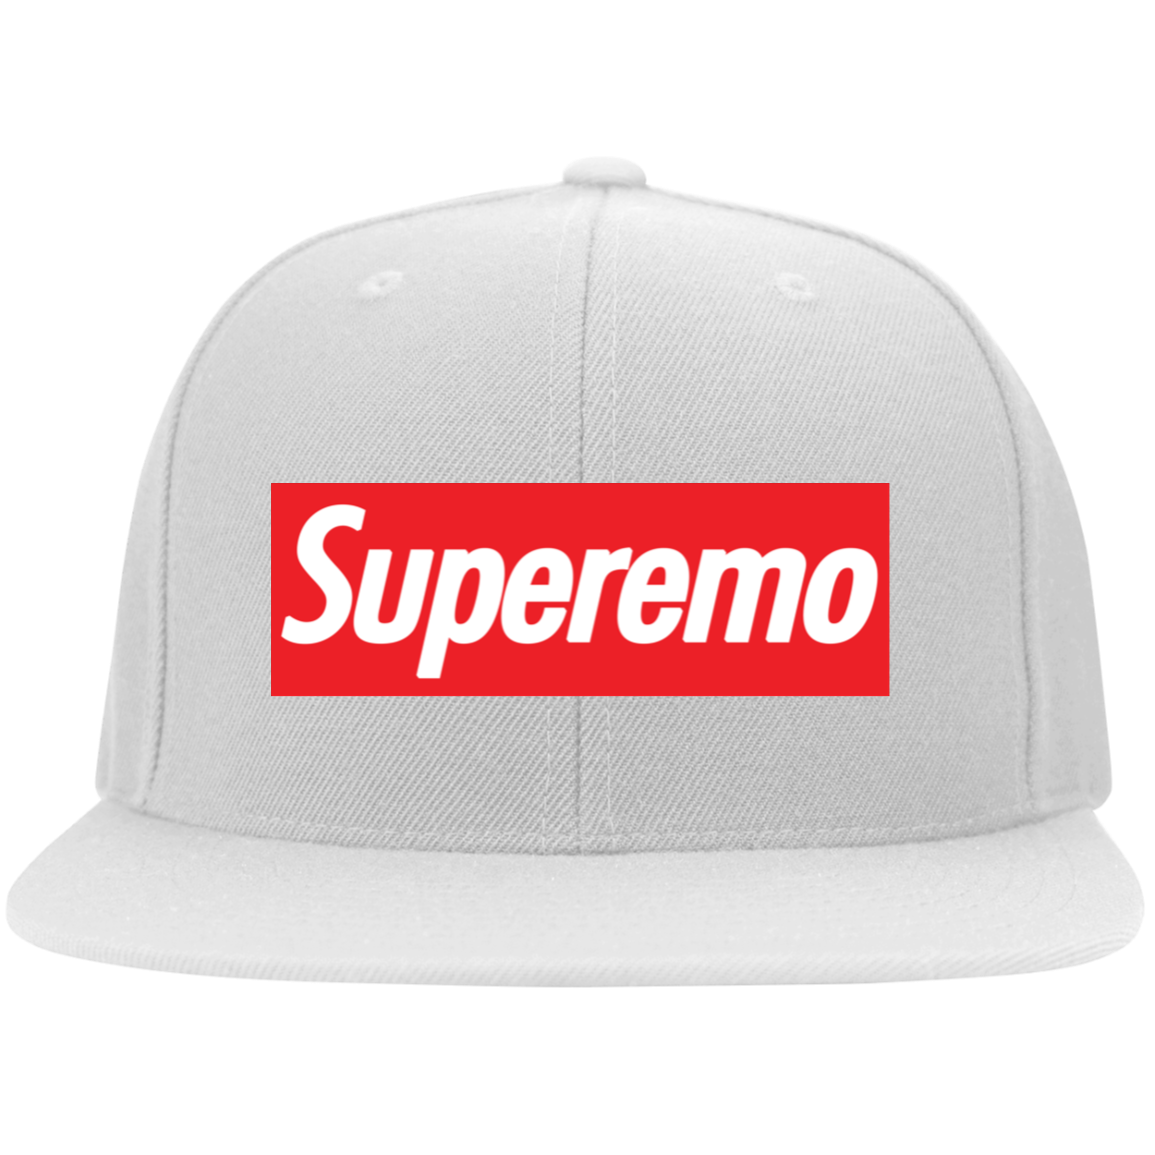 "SuperEmo" Embroidered Flat Bill Twill Flexfit Cap